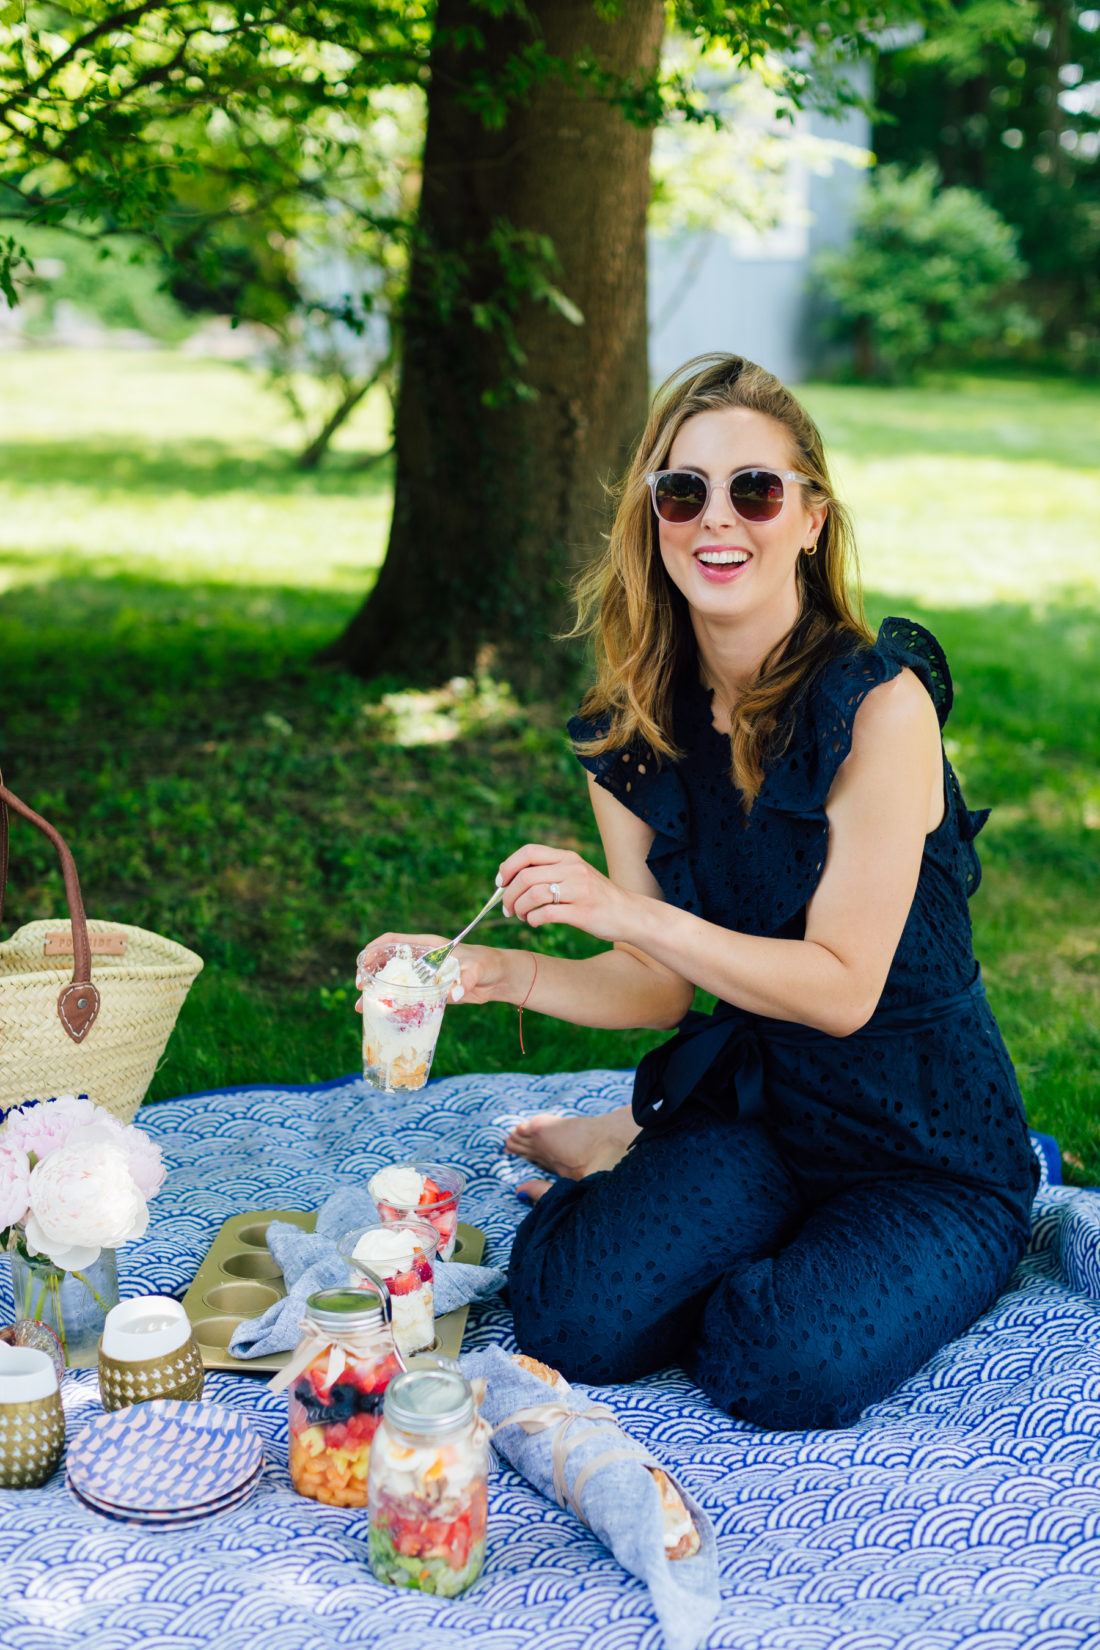 Eva Amurri Martino enjoys a picnic in her backyard